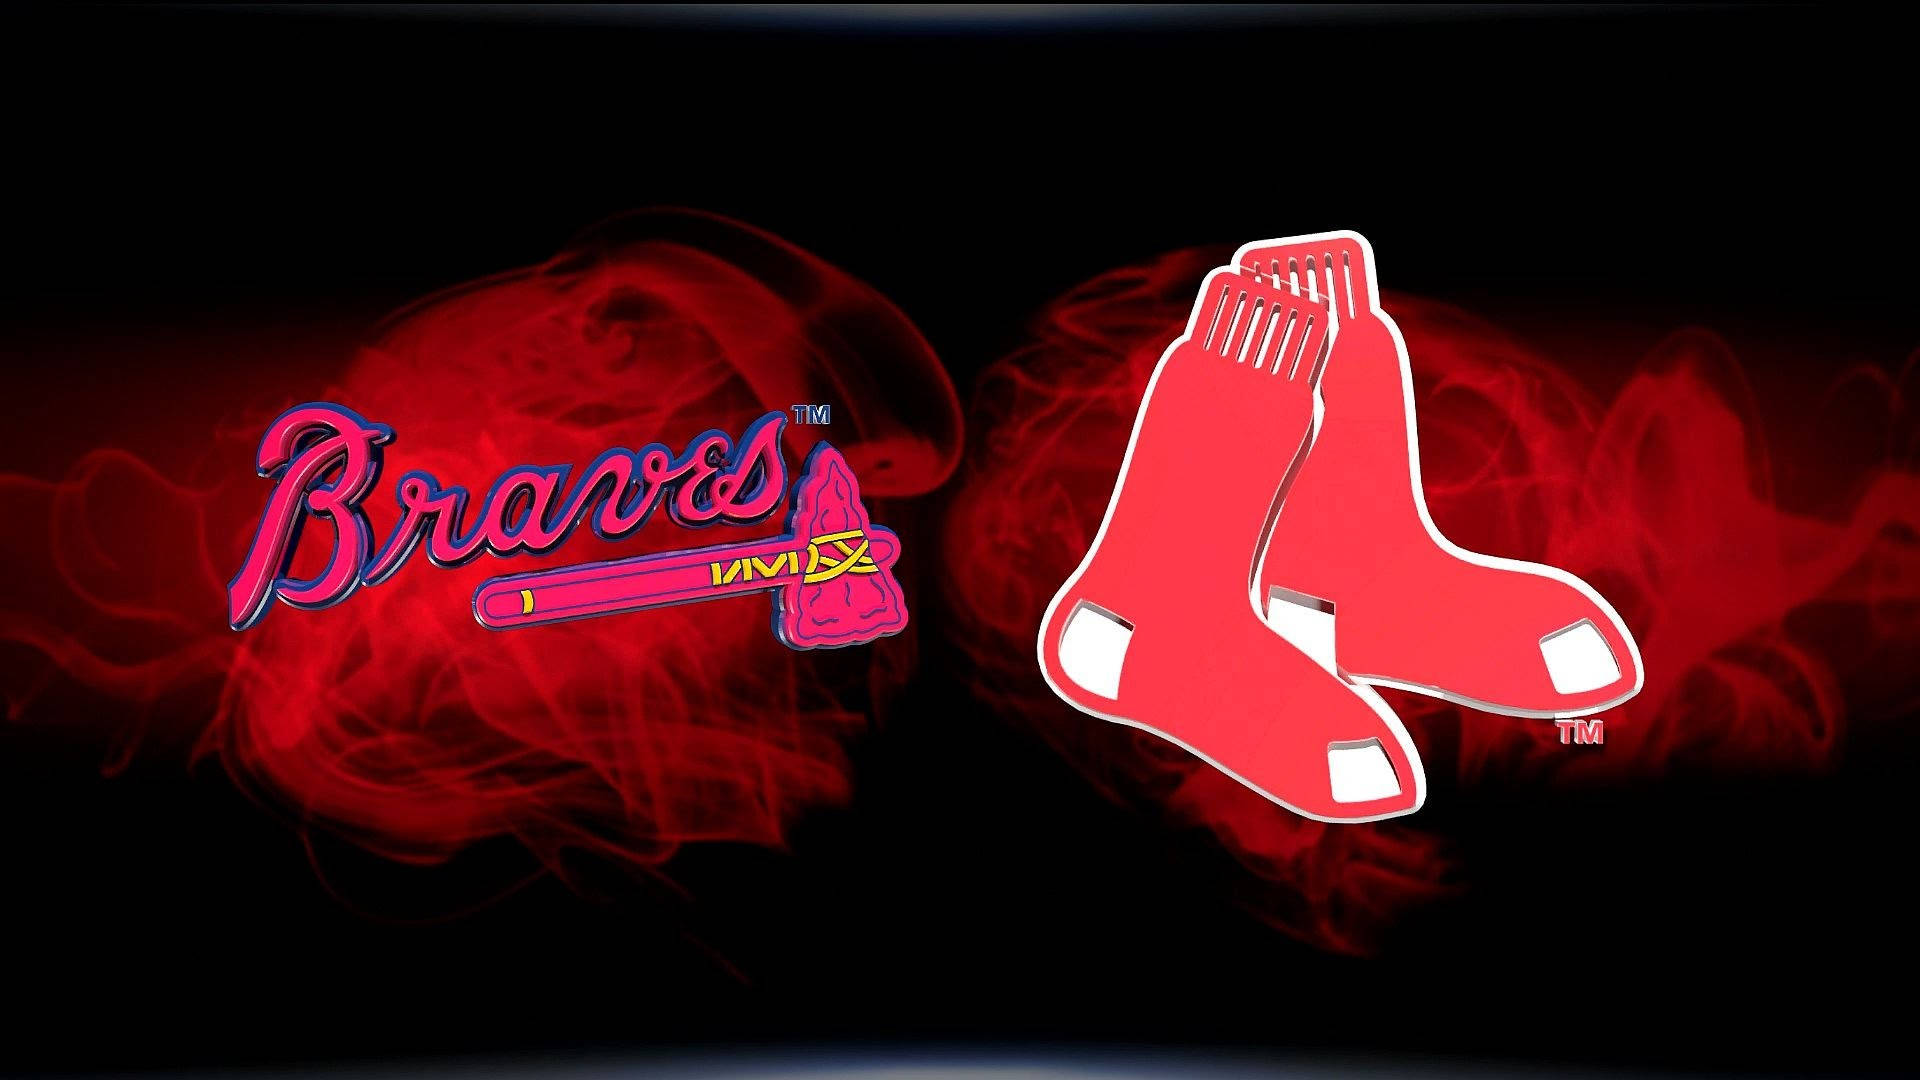 Atlanta Braves Versus Red Sox Wallpaper